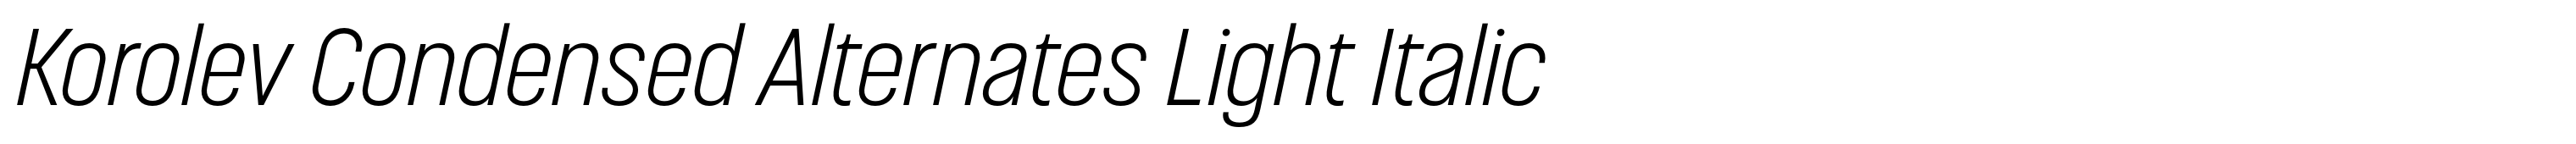 Korolev Condensed Alternates Light Italic